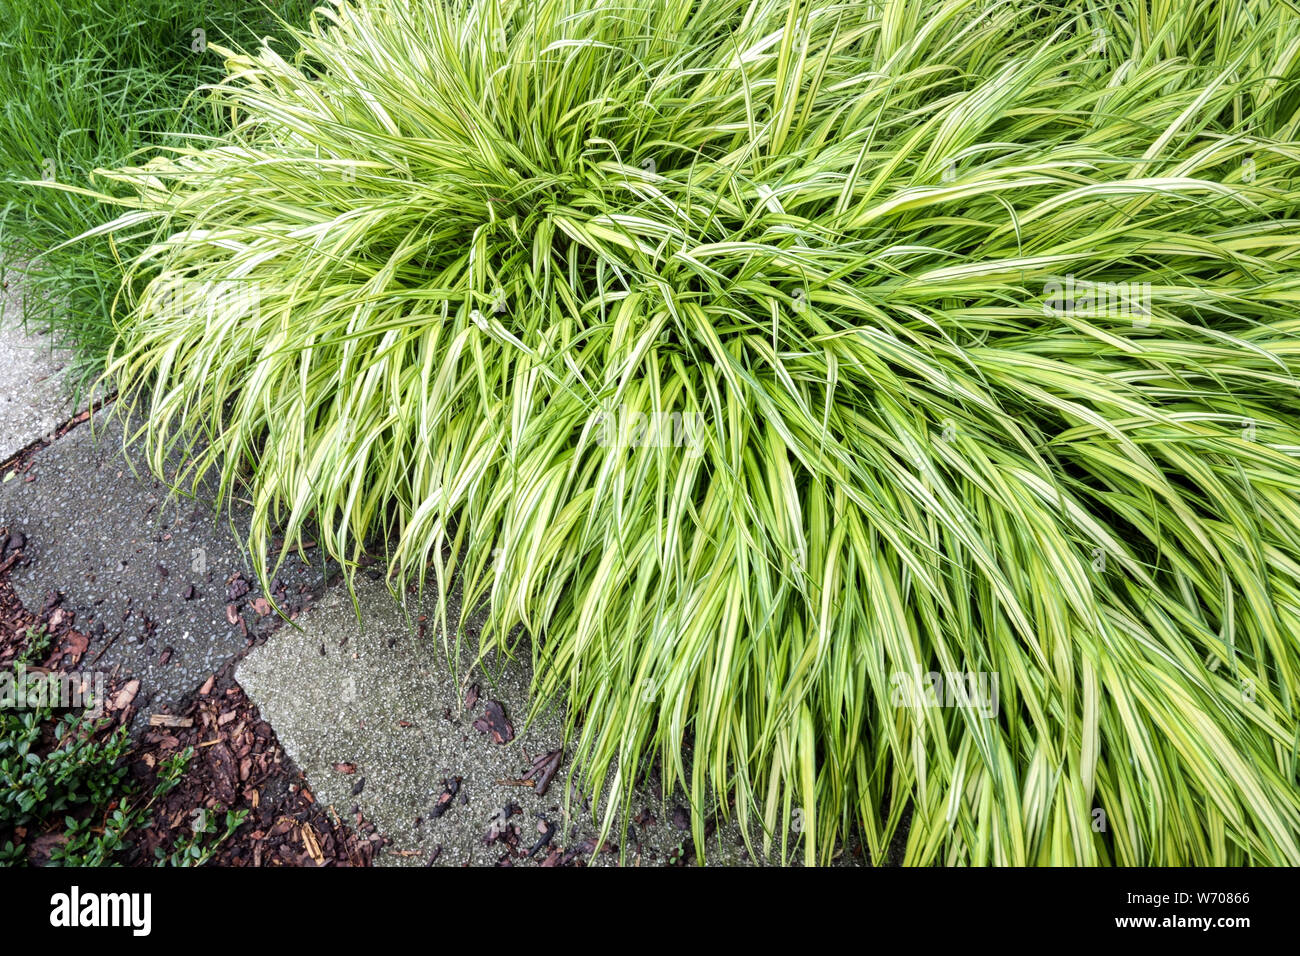 Border Japanese forest grass, Hakone grass growing at a garden path Stock Photo